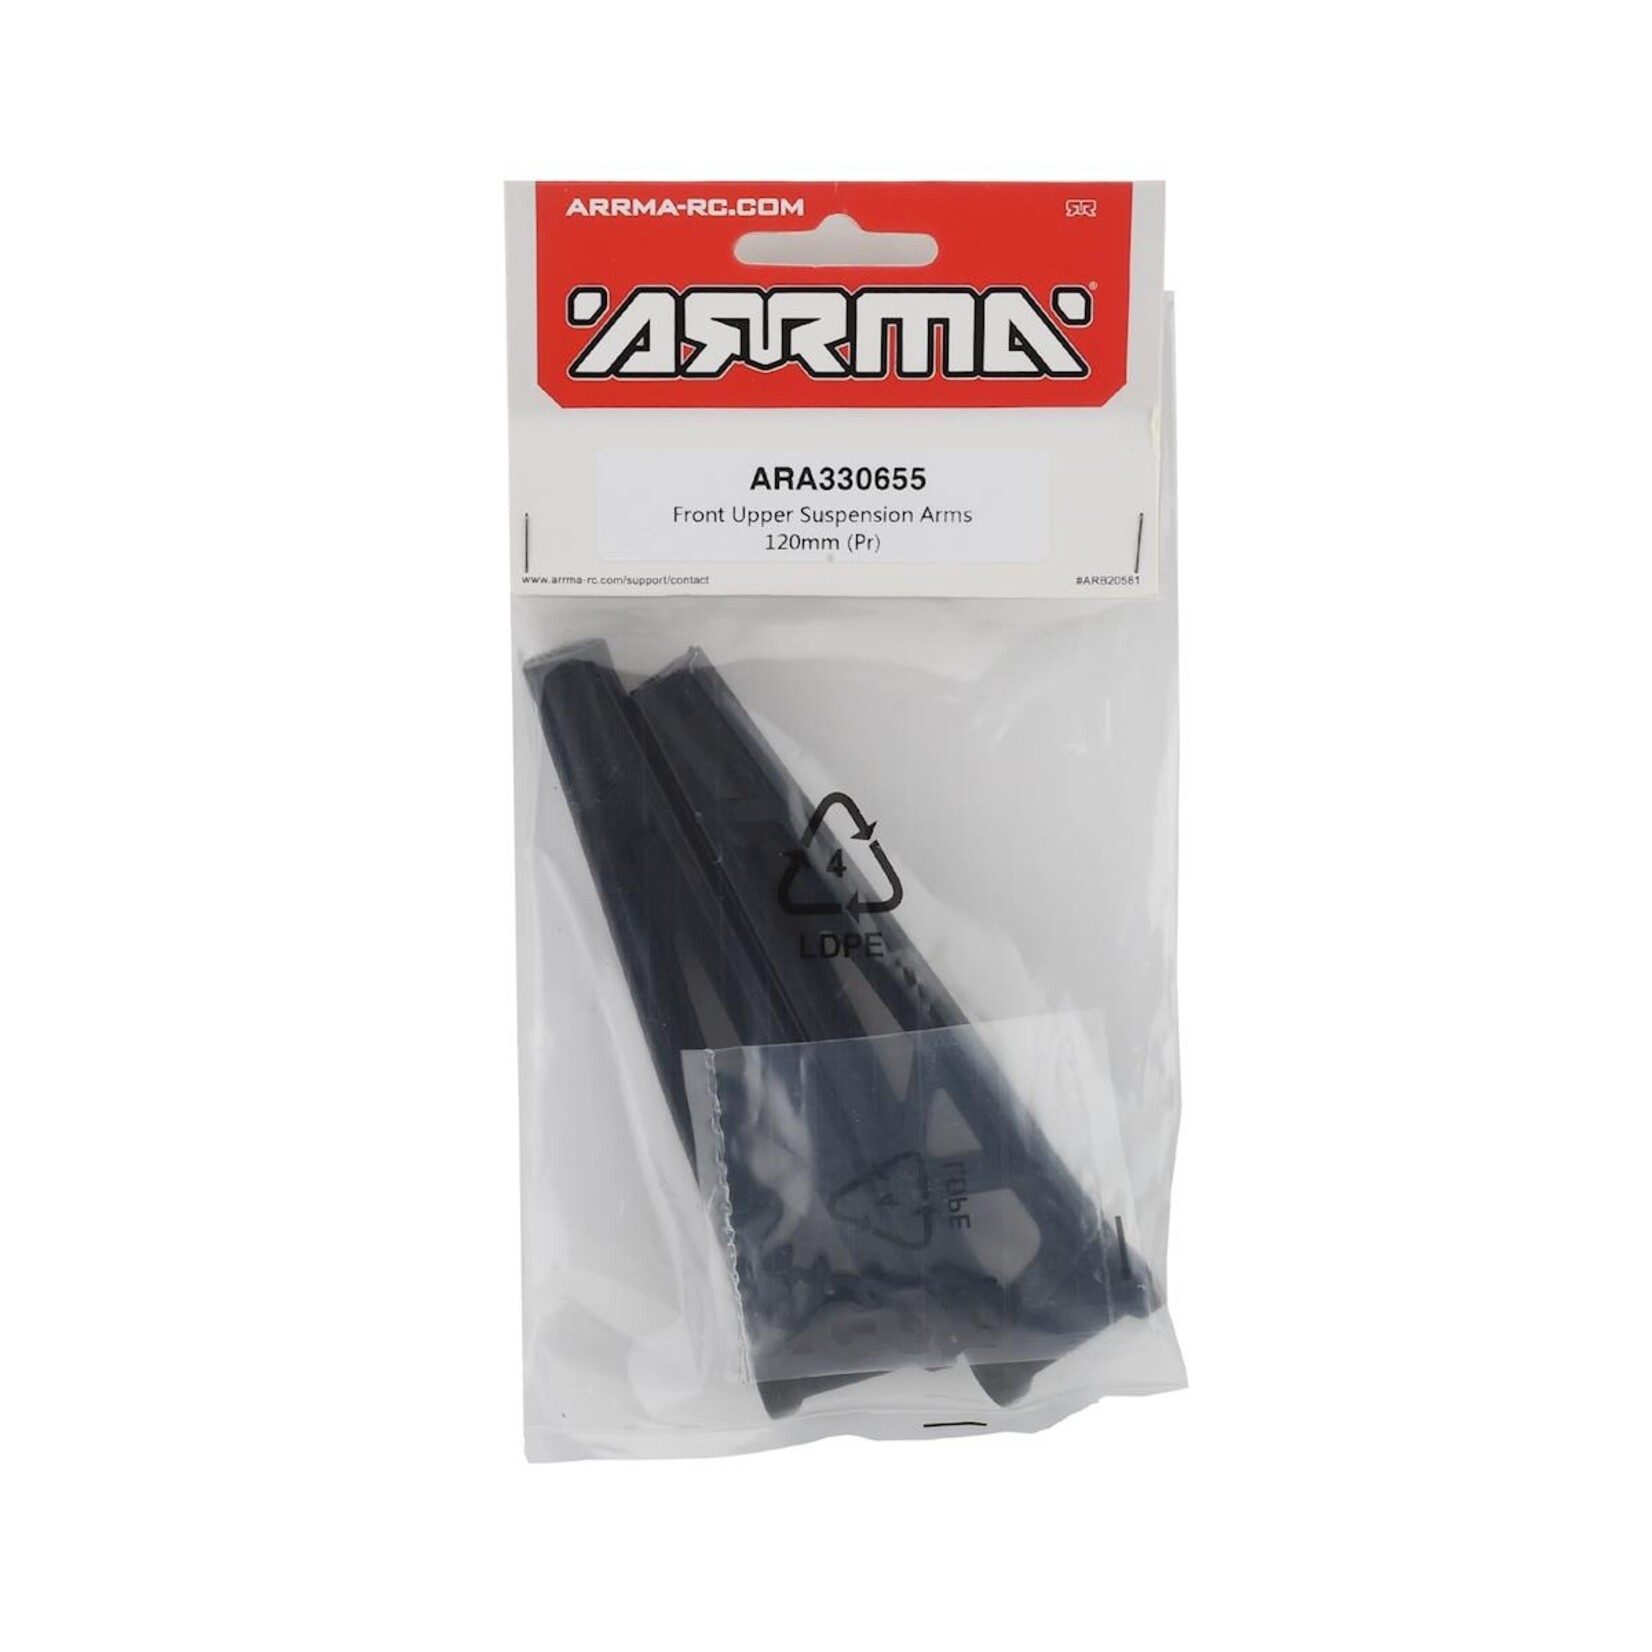 ARRMA Arrma Kraton EXB Front Upper Suspension Arms (2) #ARA330655